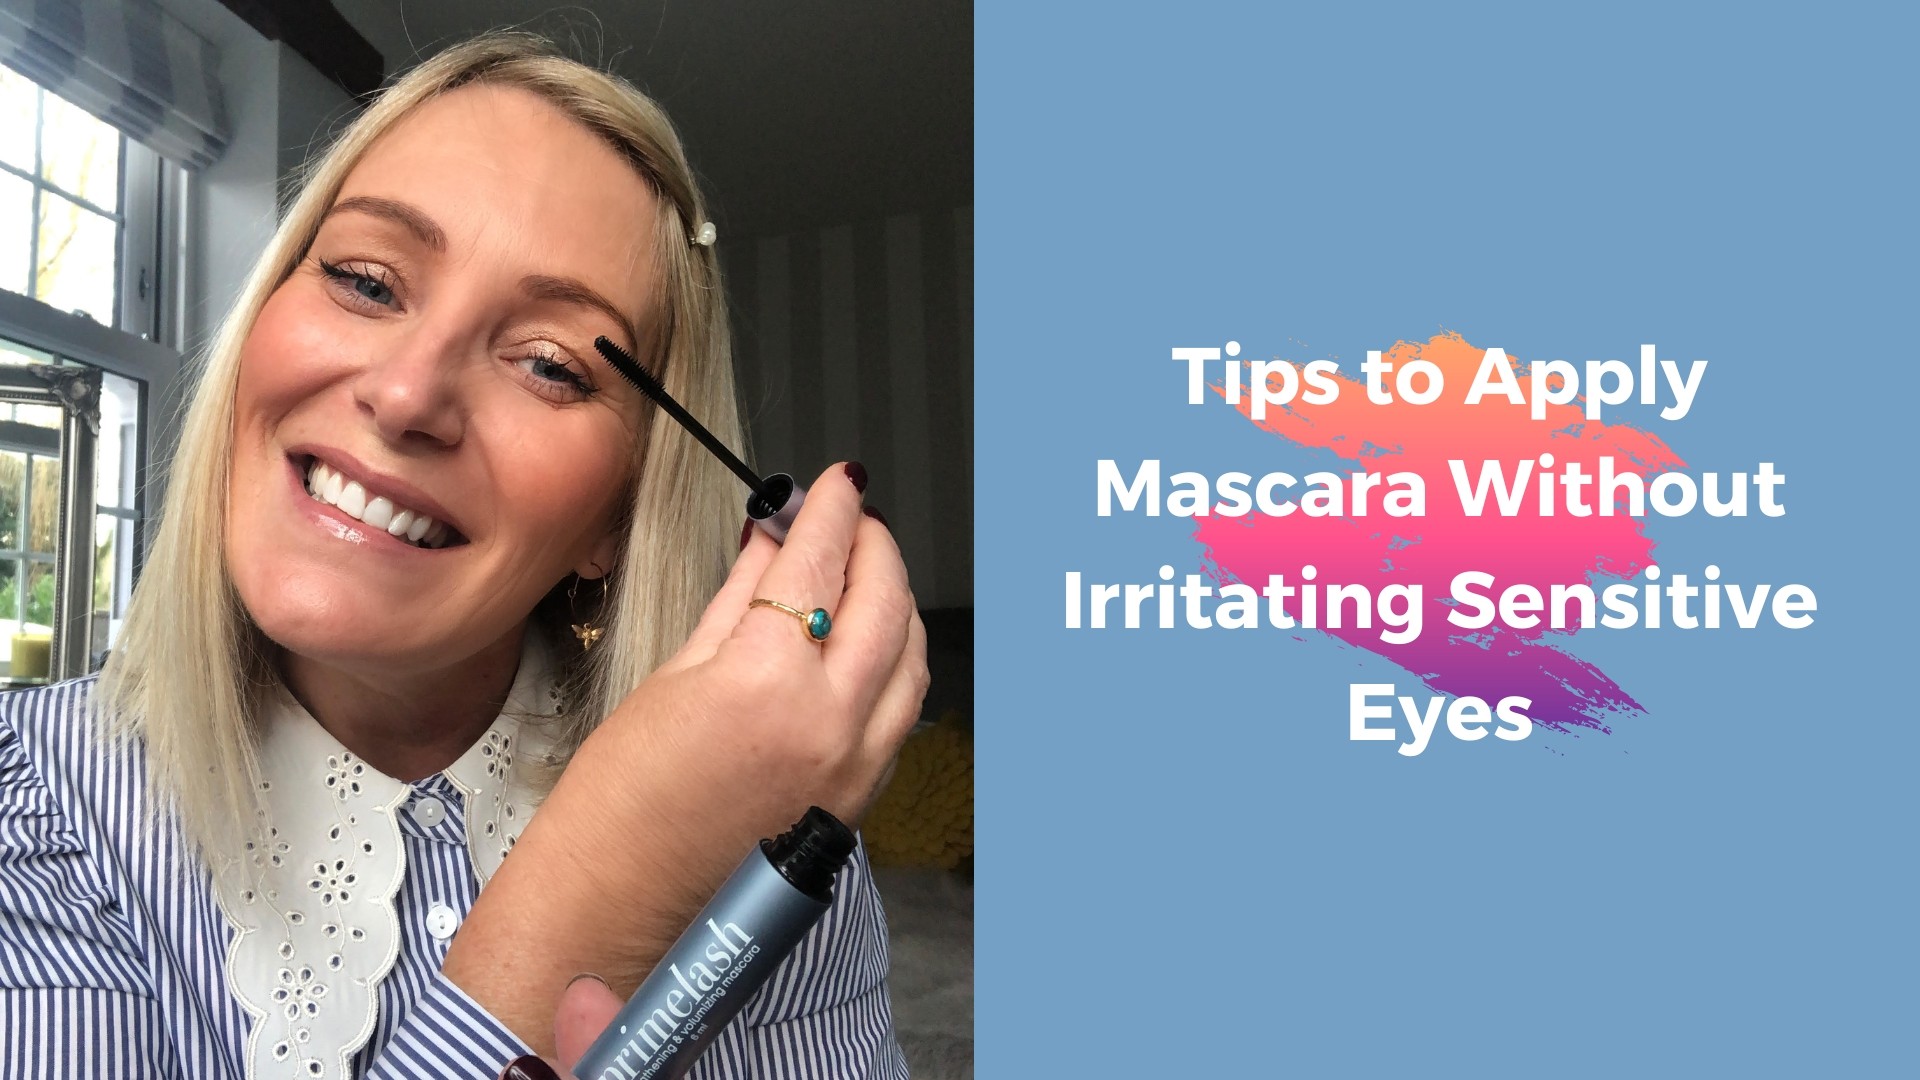 Tips to Apply Mascara Without Irritating Sensitive Eyes